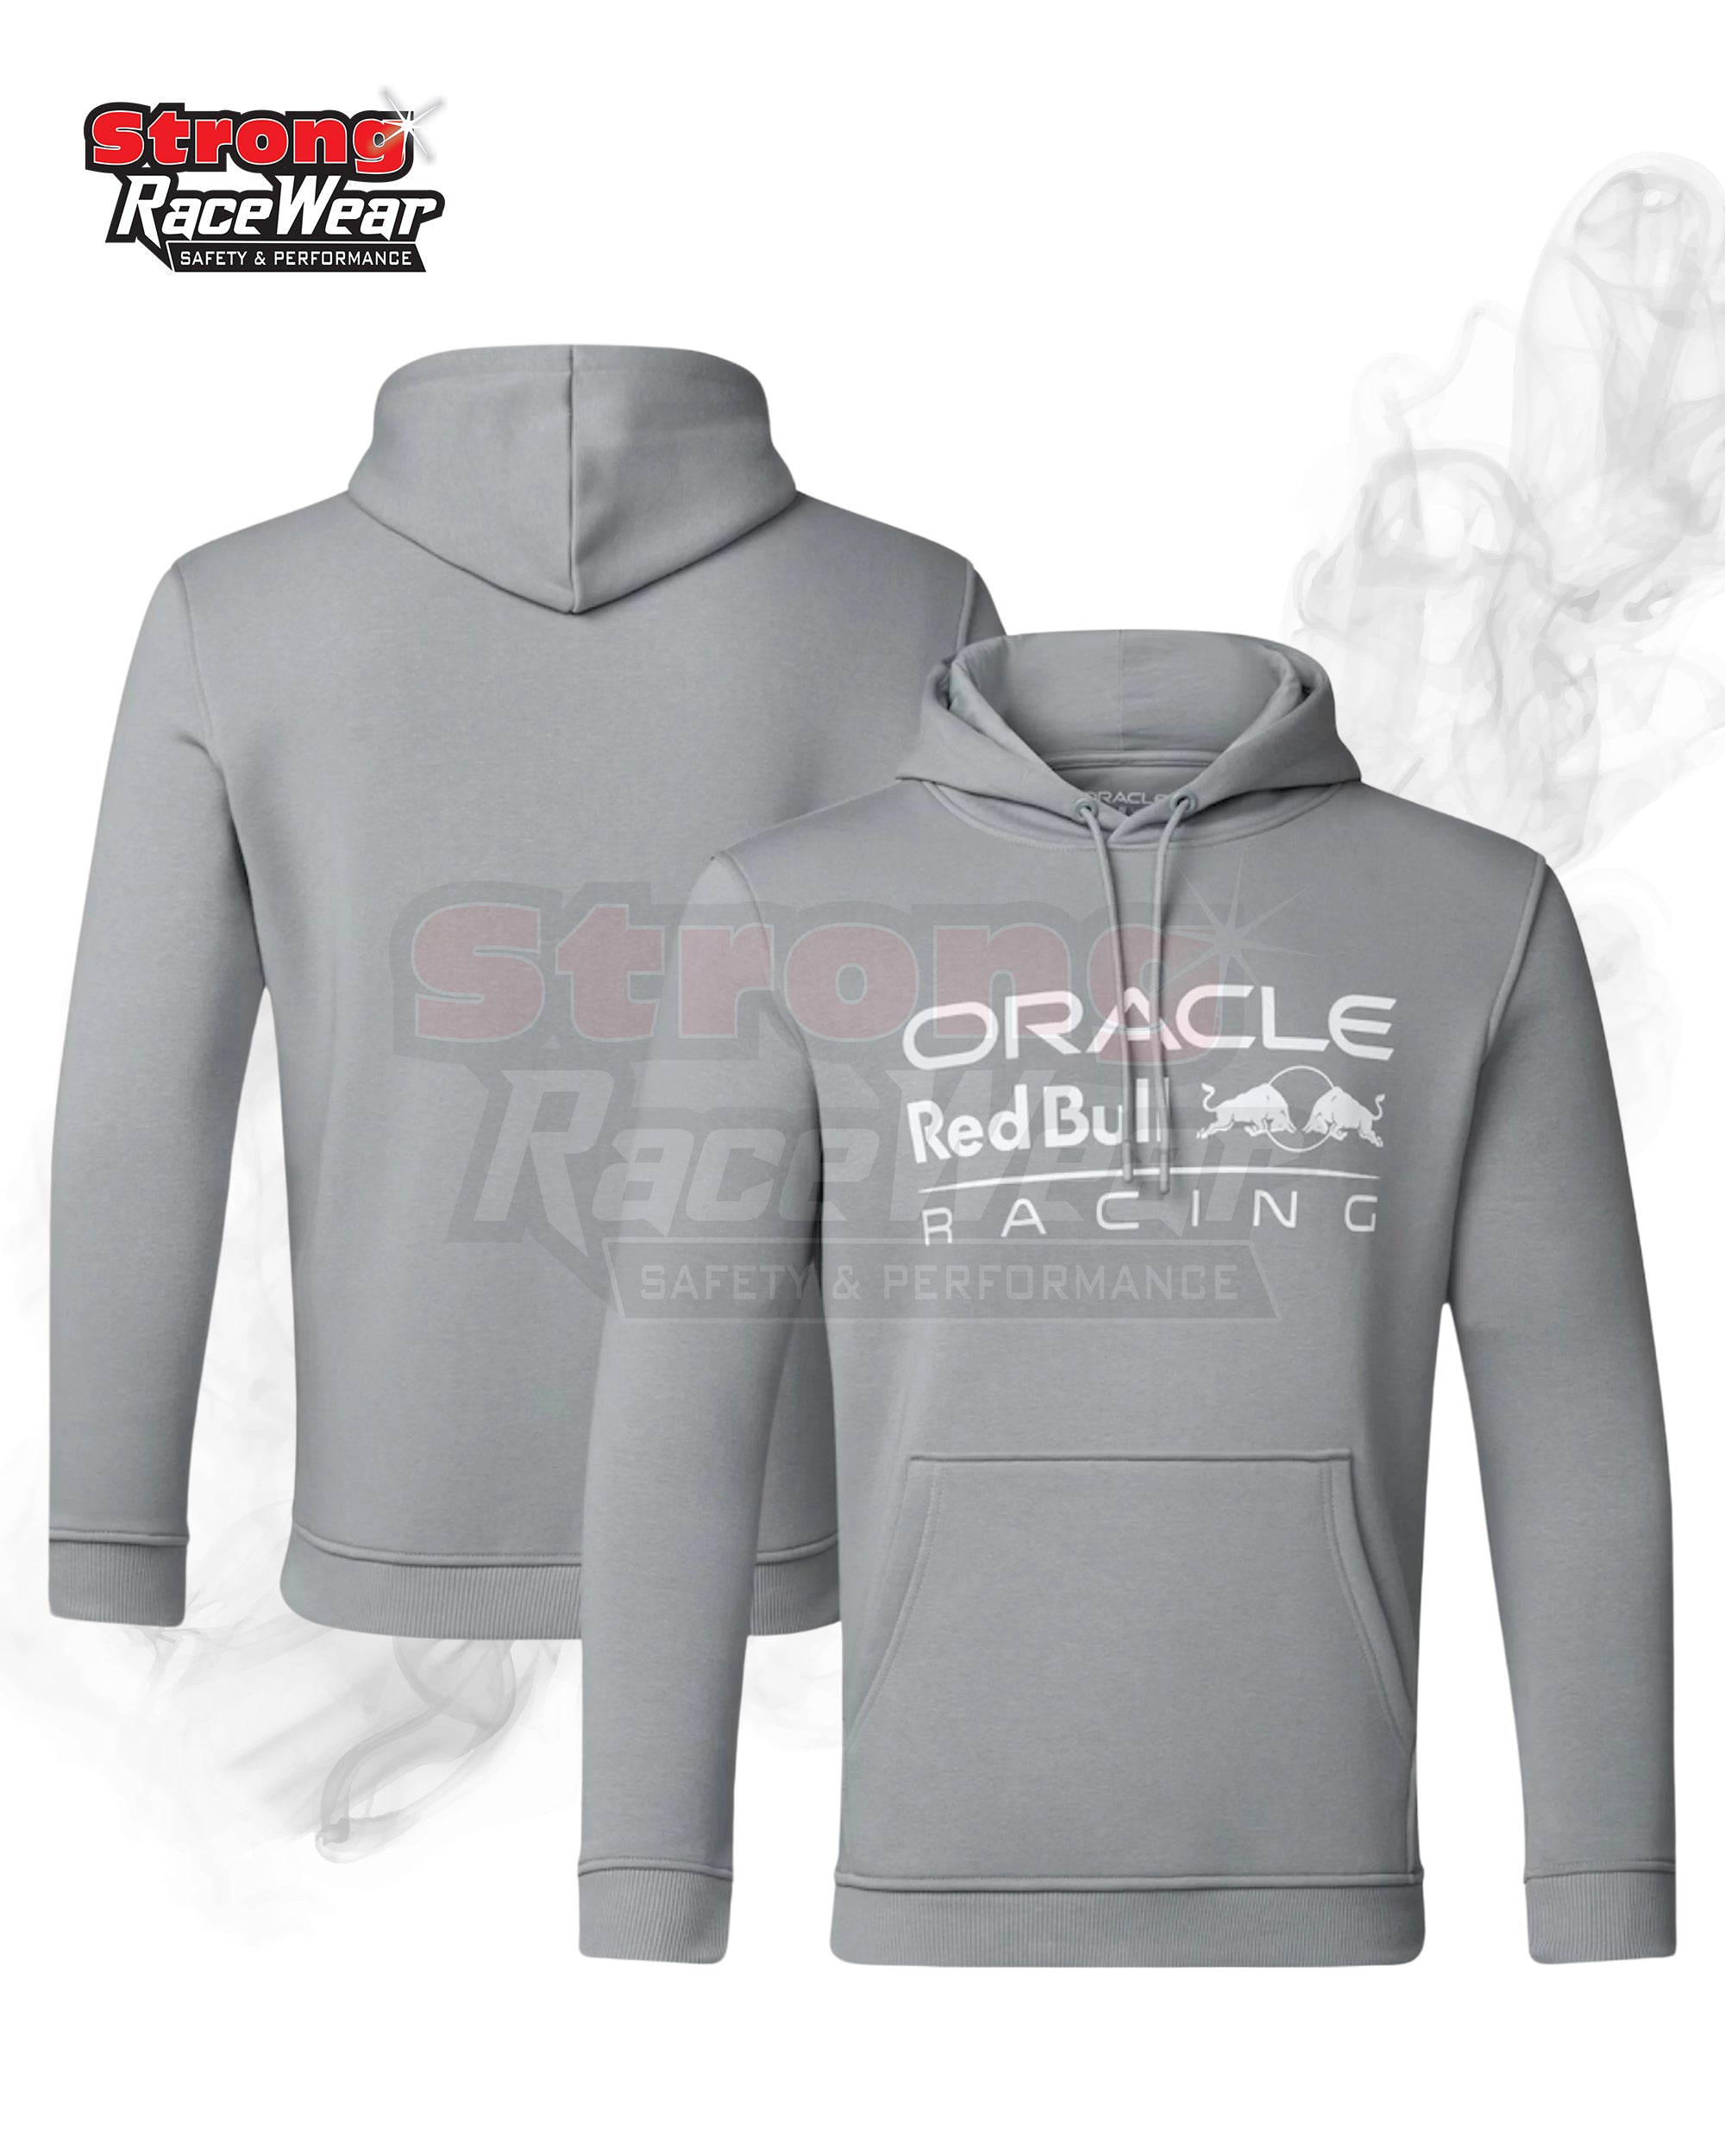 Oracle Red Bull Racing Hooded Sweat Grey